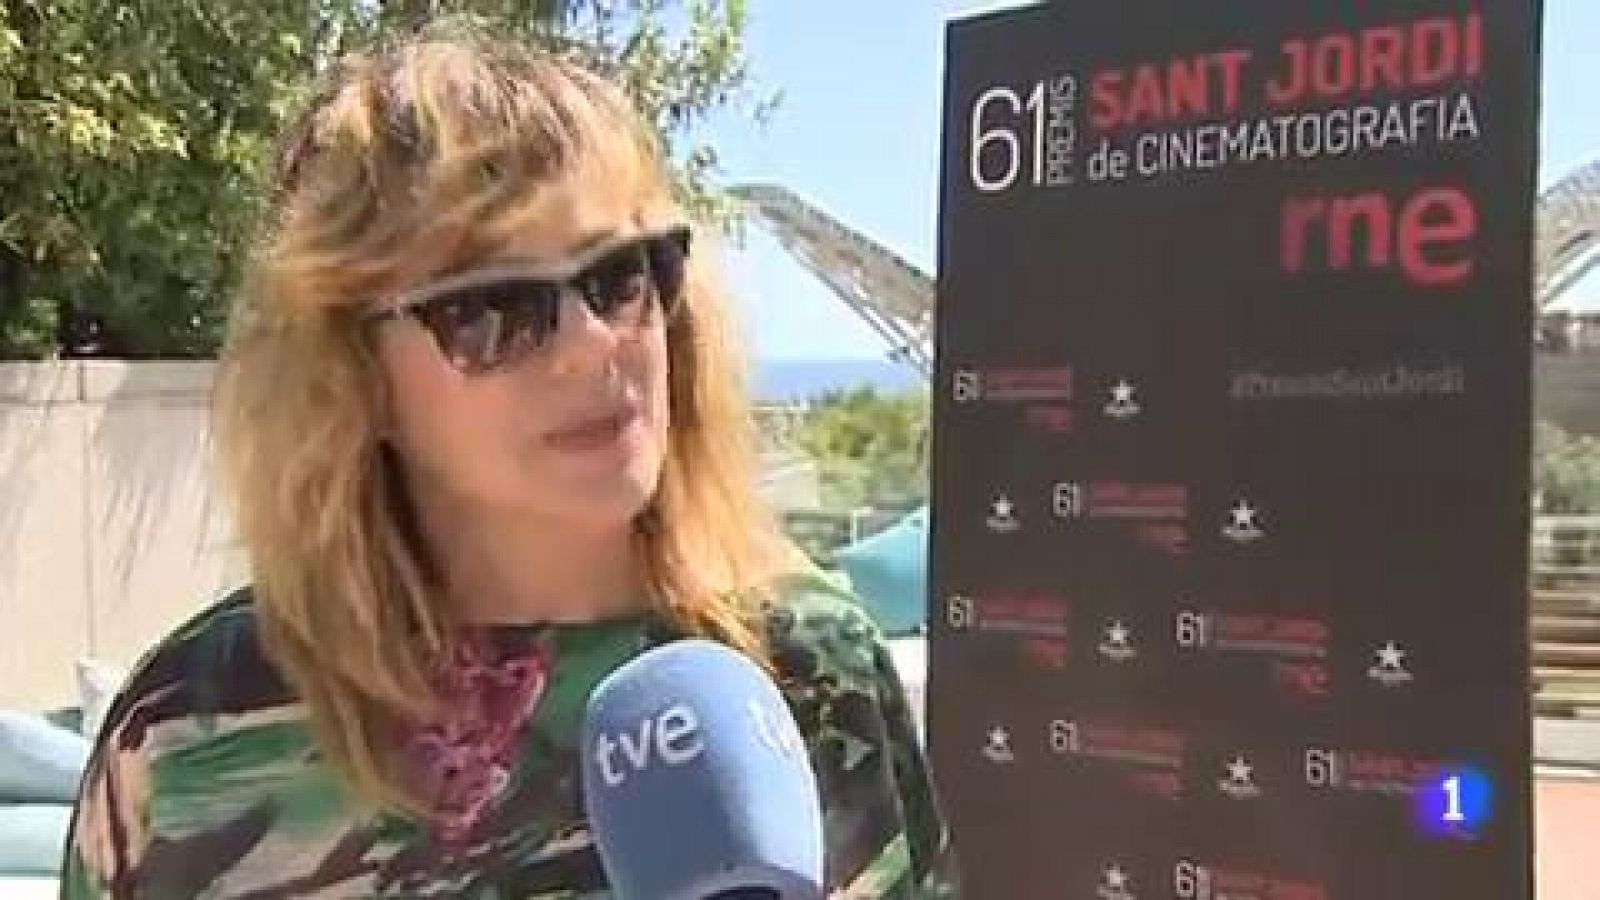 L'Informatiu: Roda de premsa Premis Sant Jordi de Cinematografia 2017 | RTVE Play